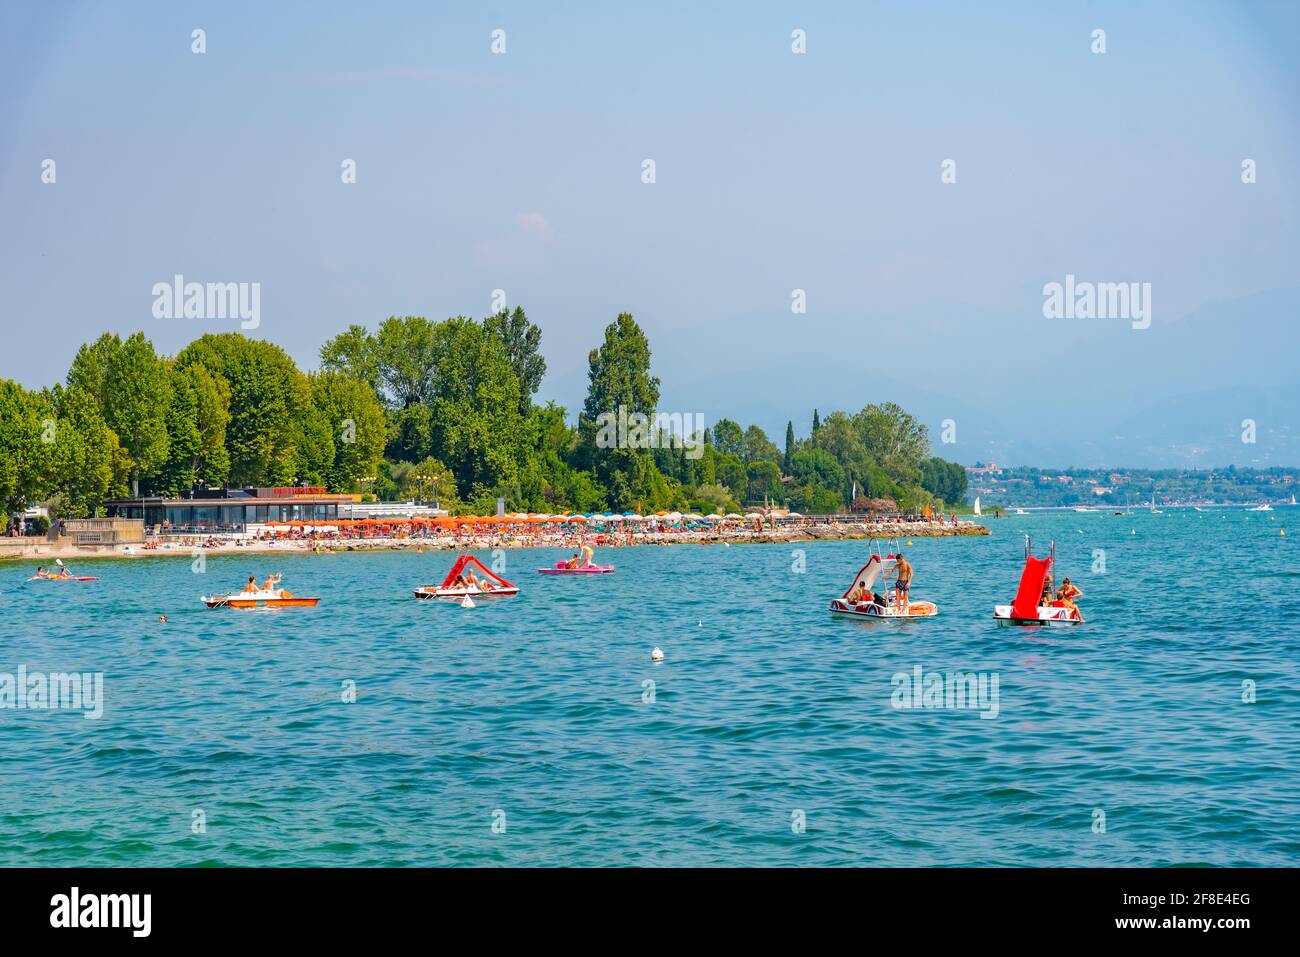 DESENZANO DEL GARDA, ITALY, JULY 21, 2019: People are enjoying a sunny day at a beach in Desenzano del Garda in Italy Stock Photo